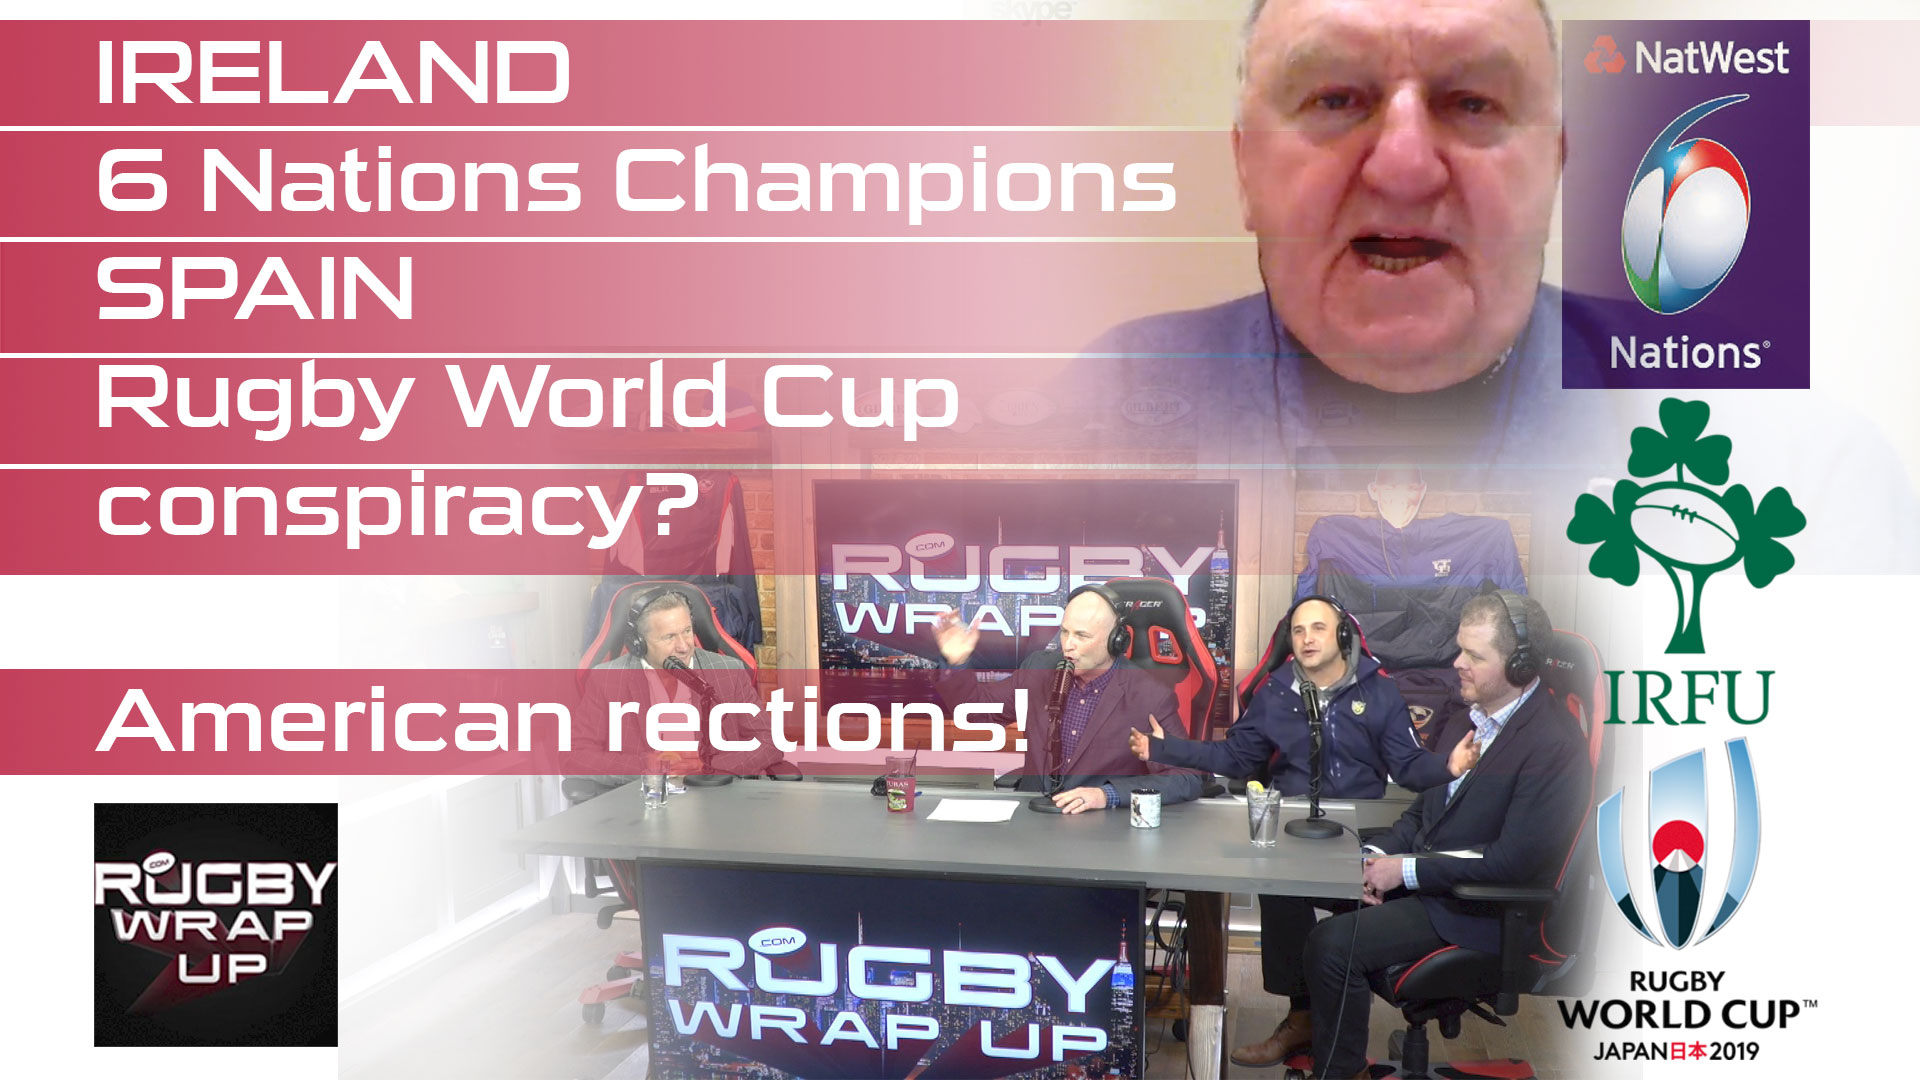 Craig_Carton, George_Hook, Matt_McCarthy, Rugby_Wrap_Up, 6-Nations-rugby, Steve_Lewis, Martin_Pengelly